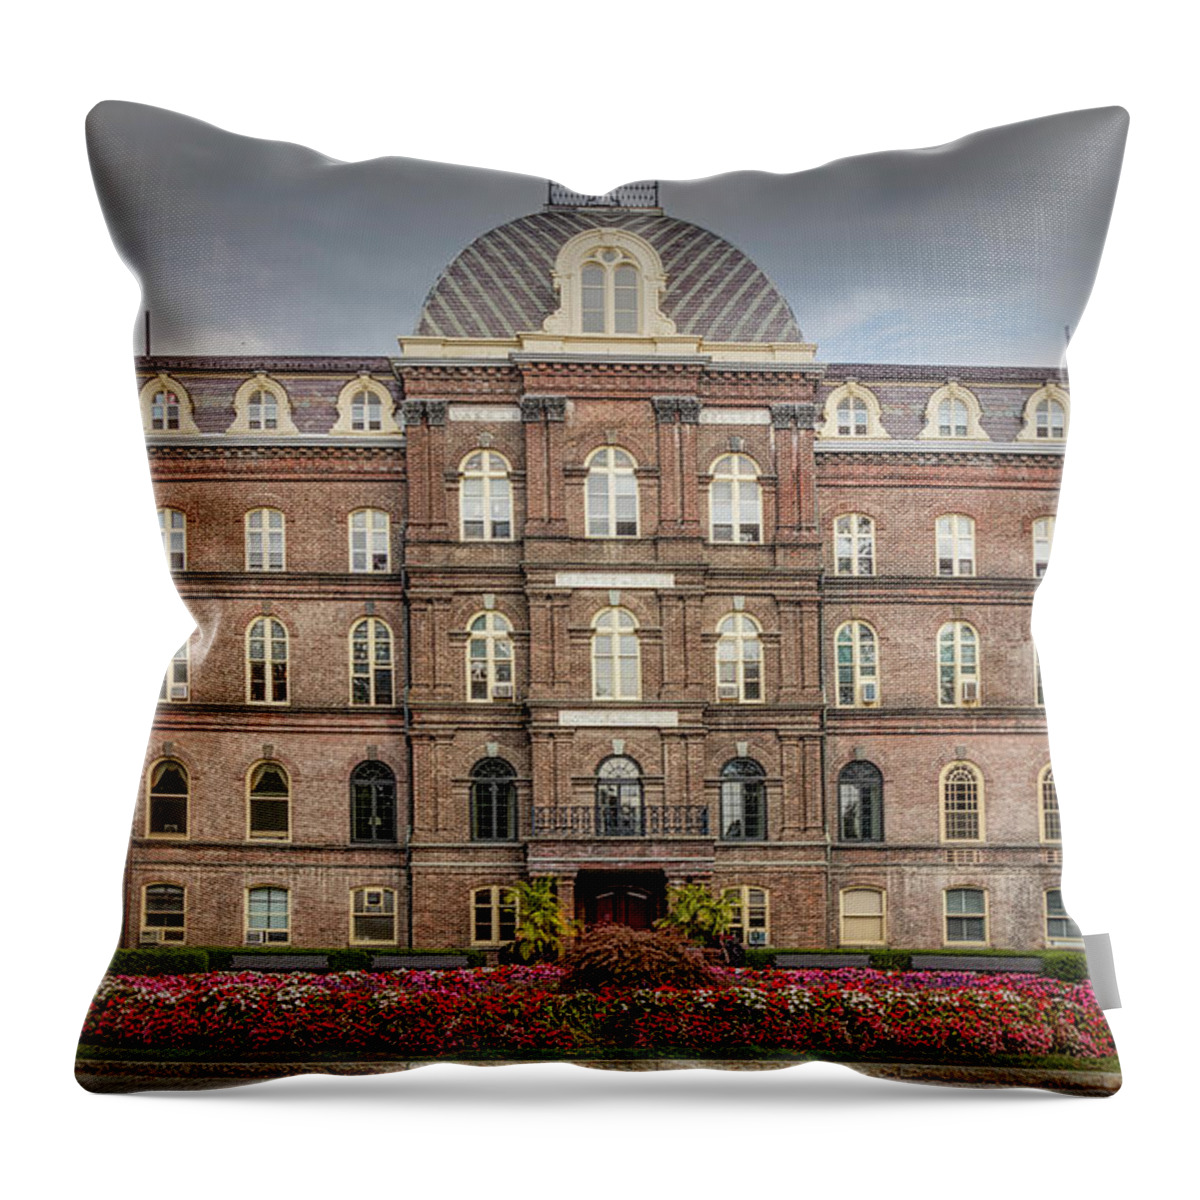 Vassar College Throw Pillow featuring the photograph Vassar College Main Building by Susan Candelario